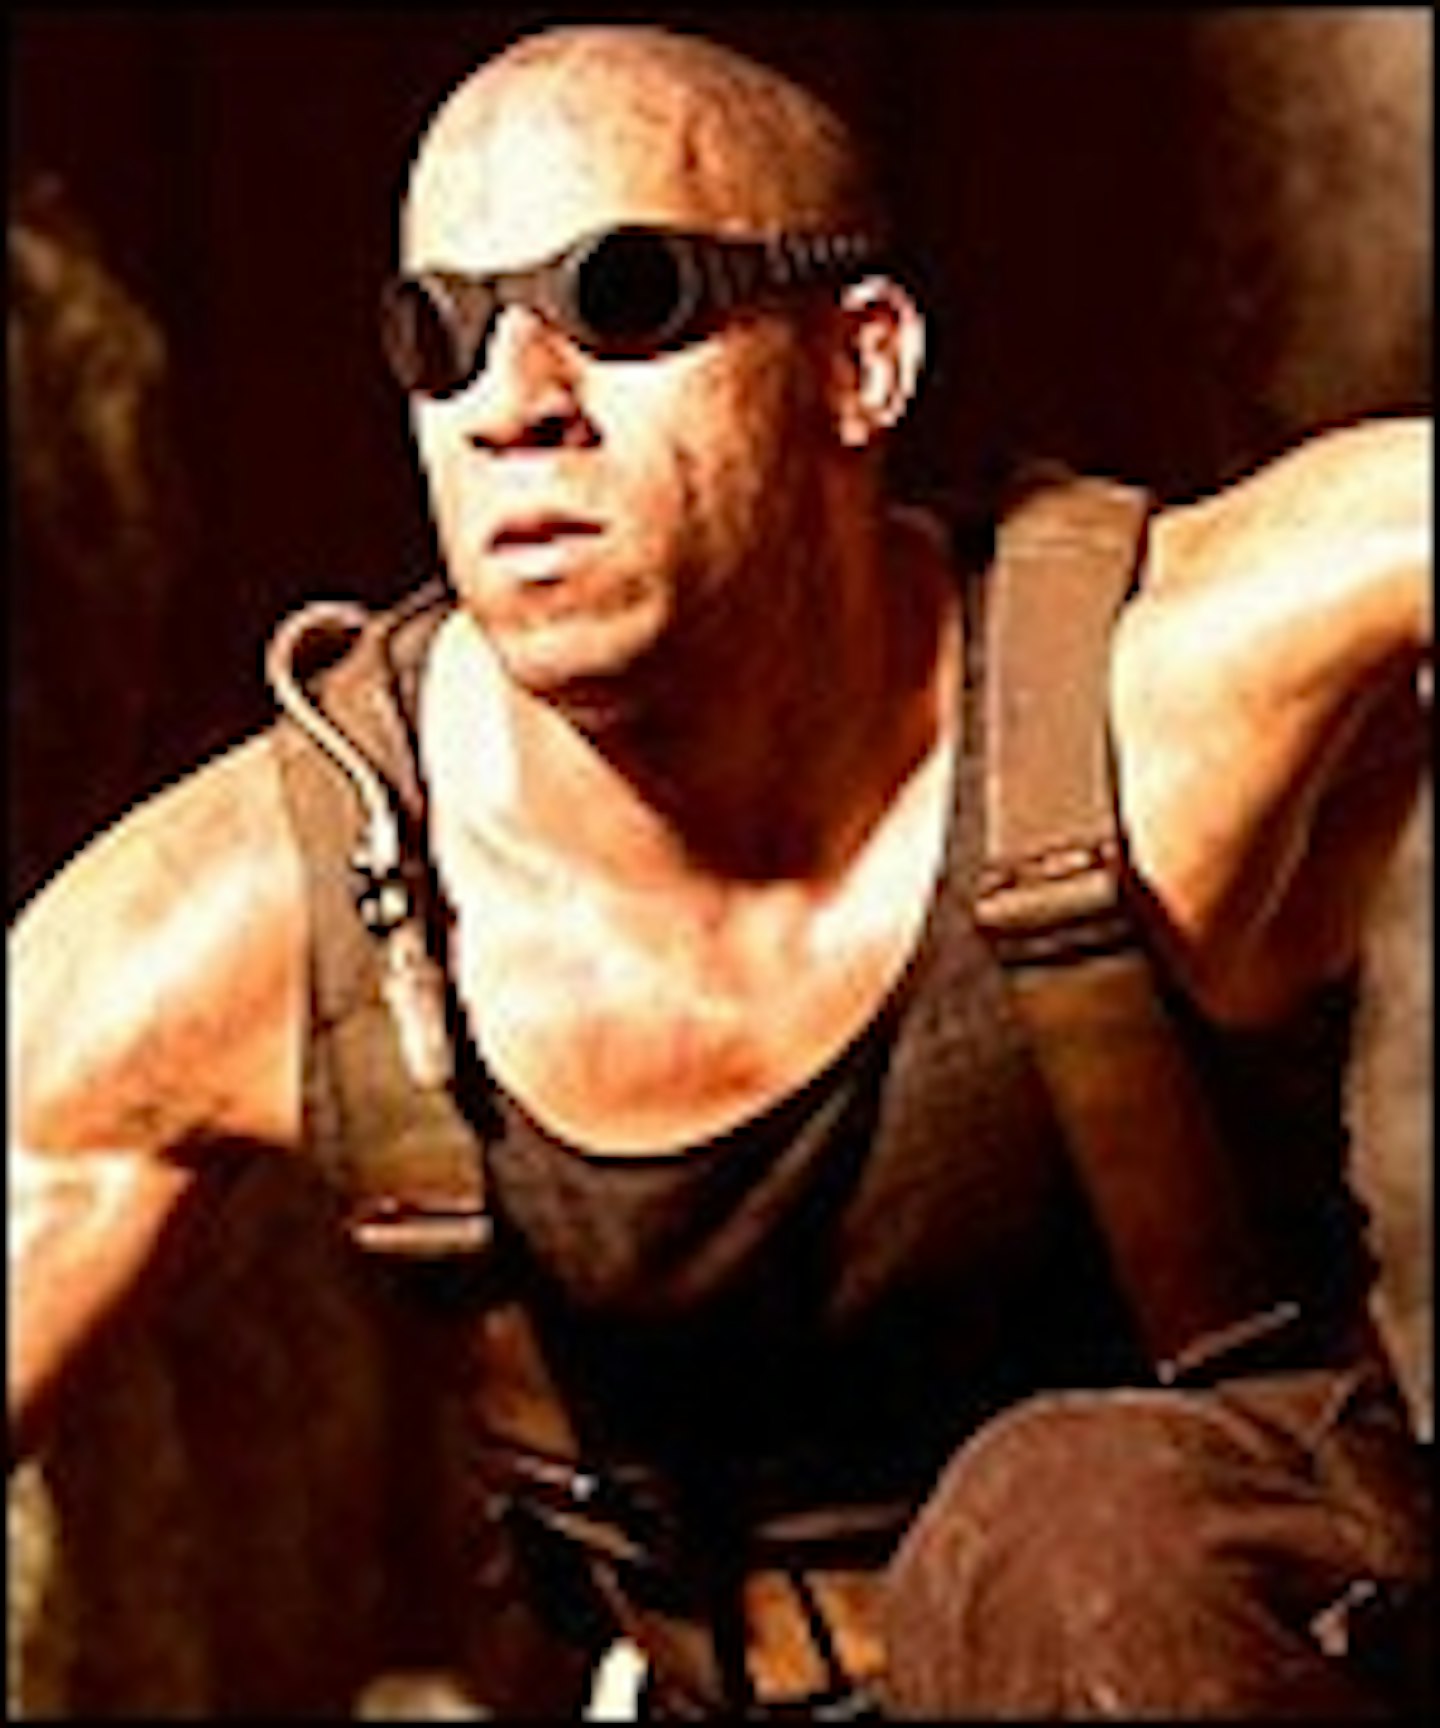 Riddick 3 Starts Casting